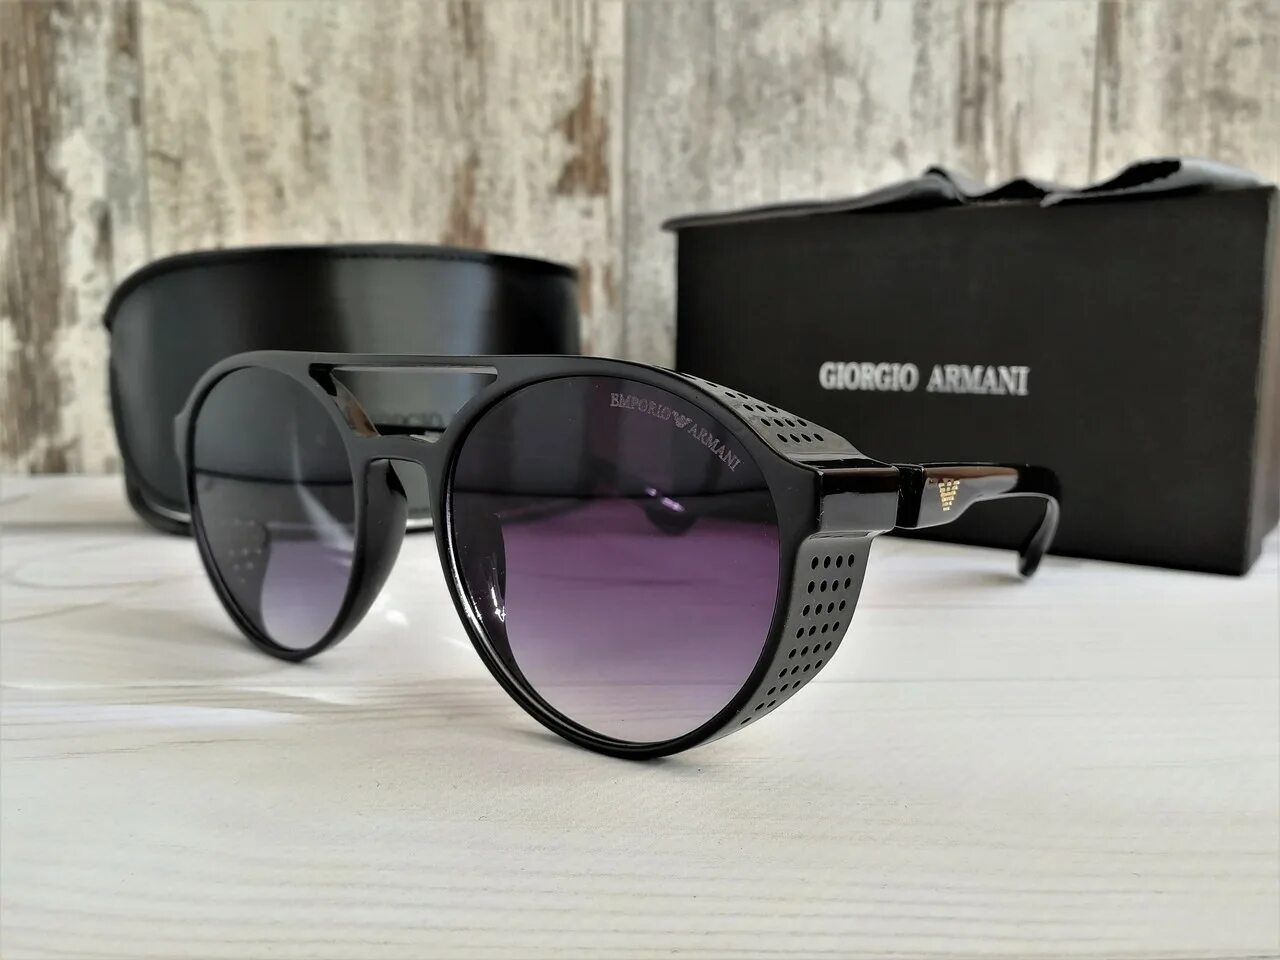 Солнцезащитные очки armani мужские. Очки Эмпорио Армани. Очки Джорджио Армани. Giorgio Armani очки солнцезащитные мужские. Очки Джорджио Армани мужские солнцезащитные 135.